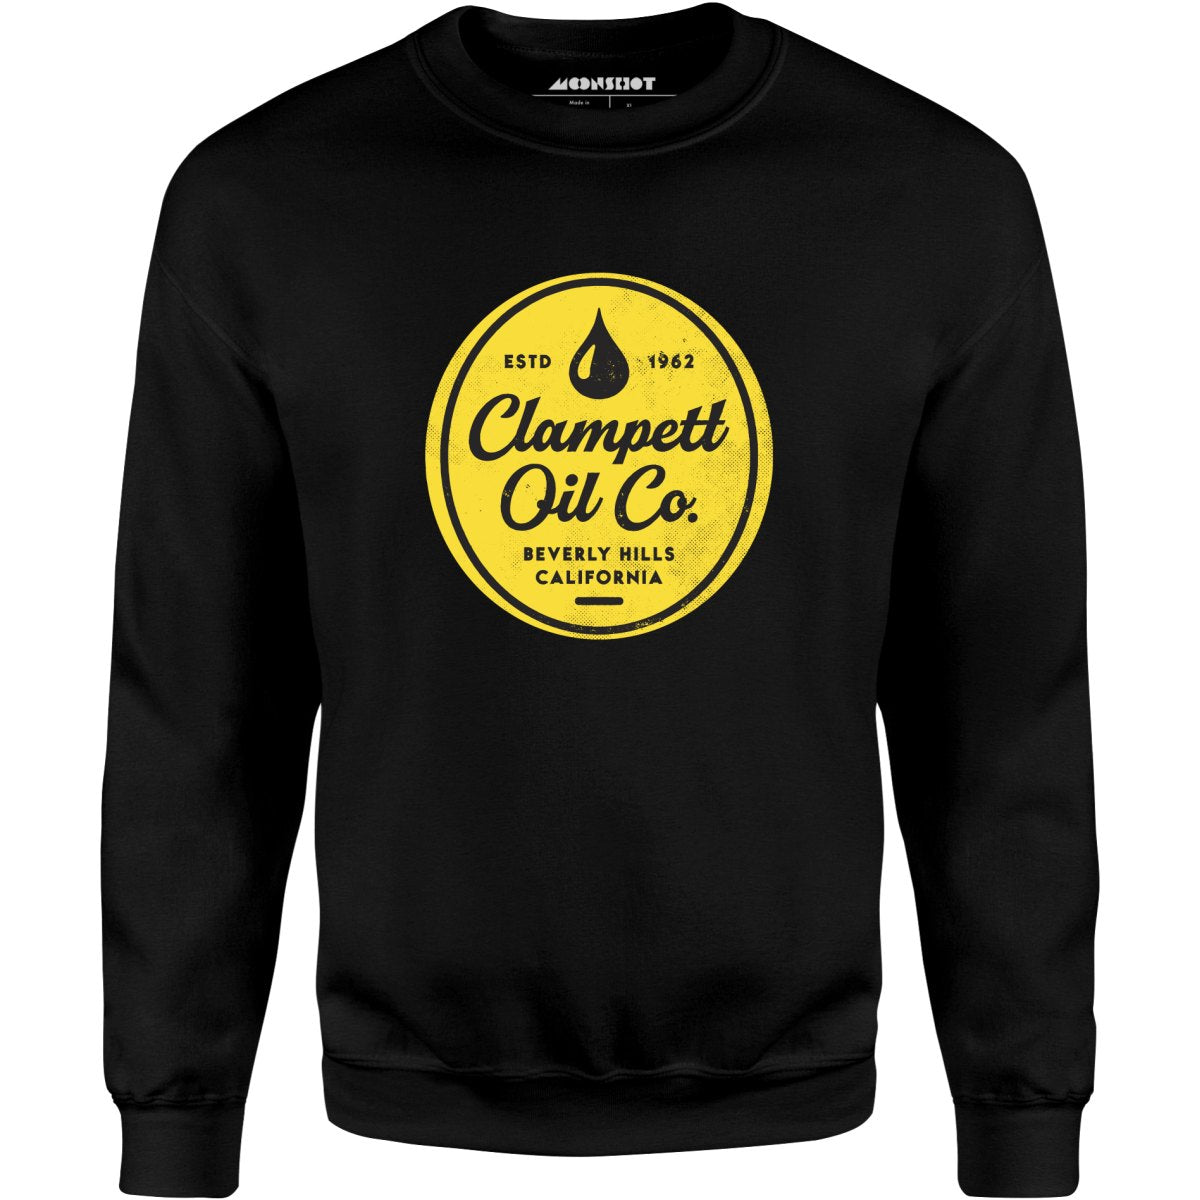 Clampett Oil Co. - Unisex Sweatshirt